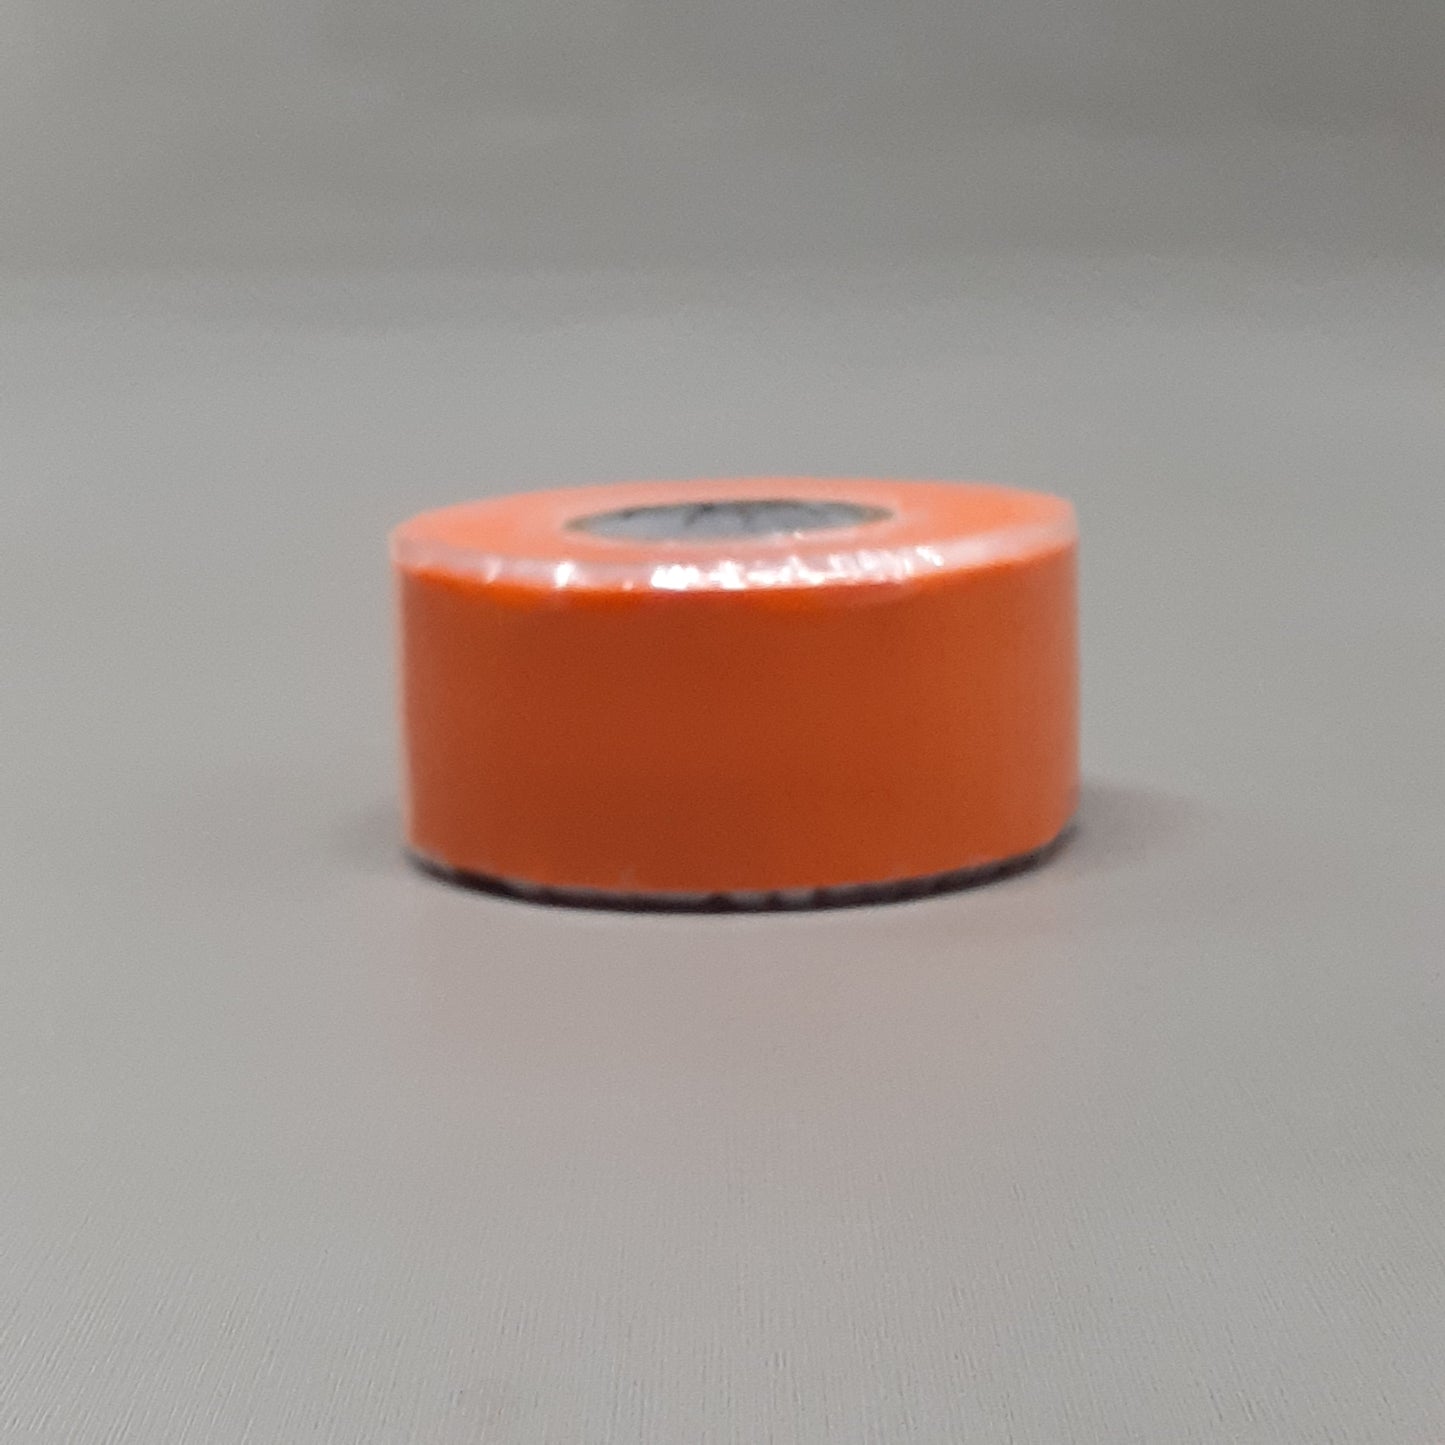 ERGODYNE 12 Foot Self-Adhering Tape Trap Orange(New)